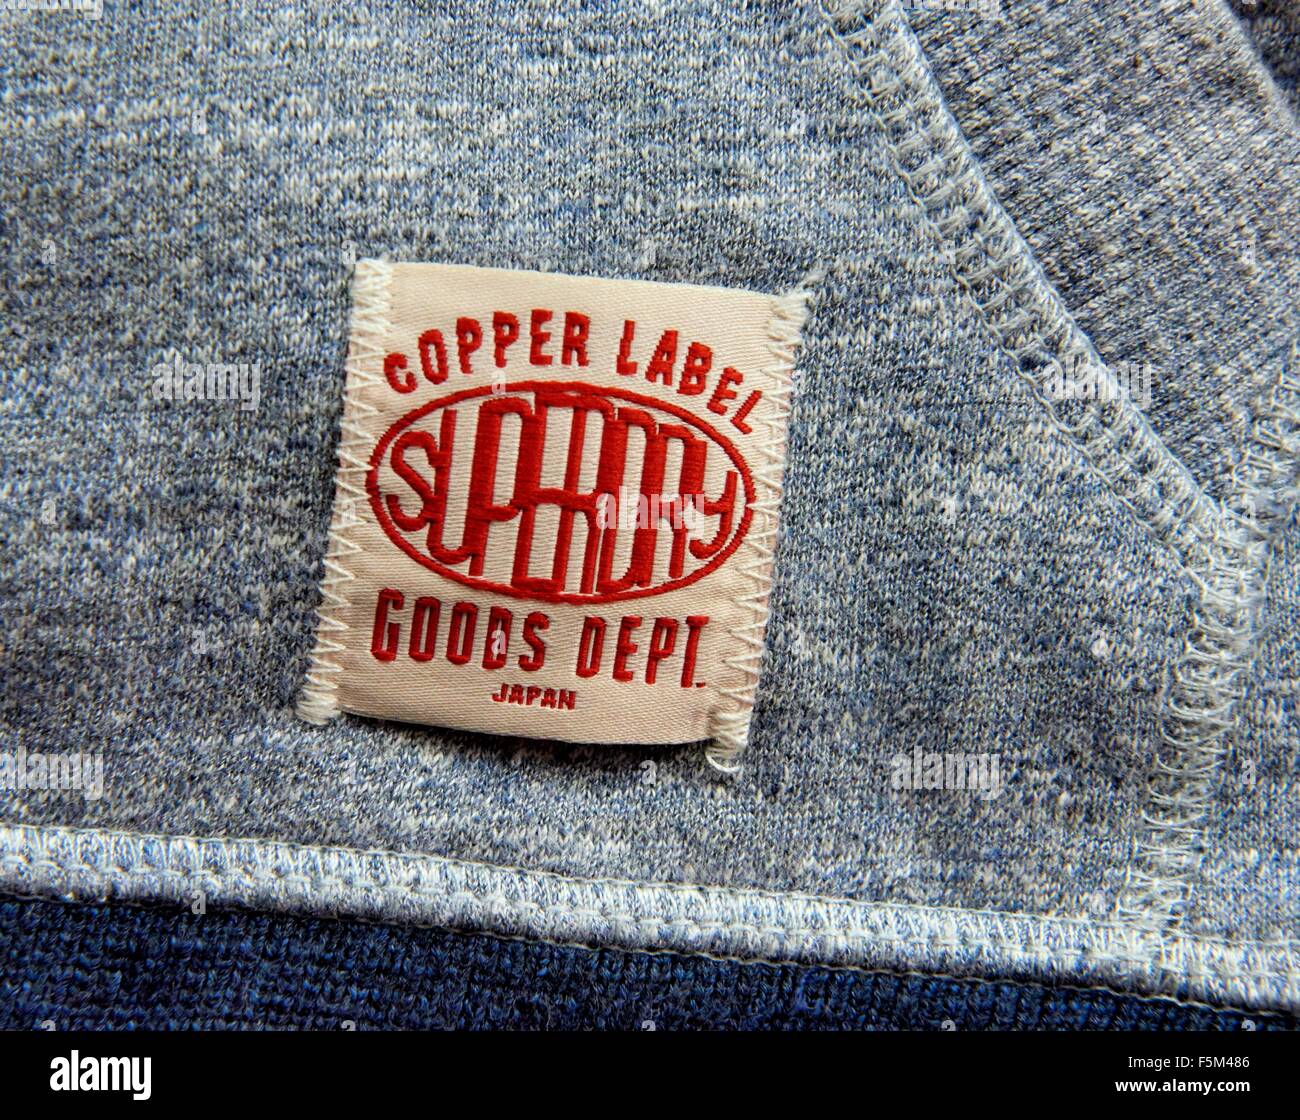 Superdry clothing label logos Stock Photo - Alamy